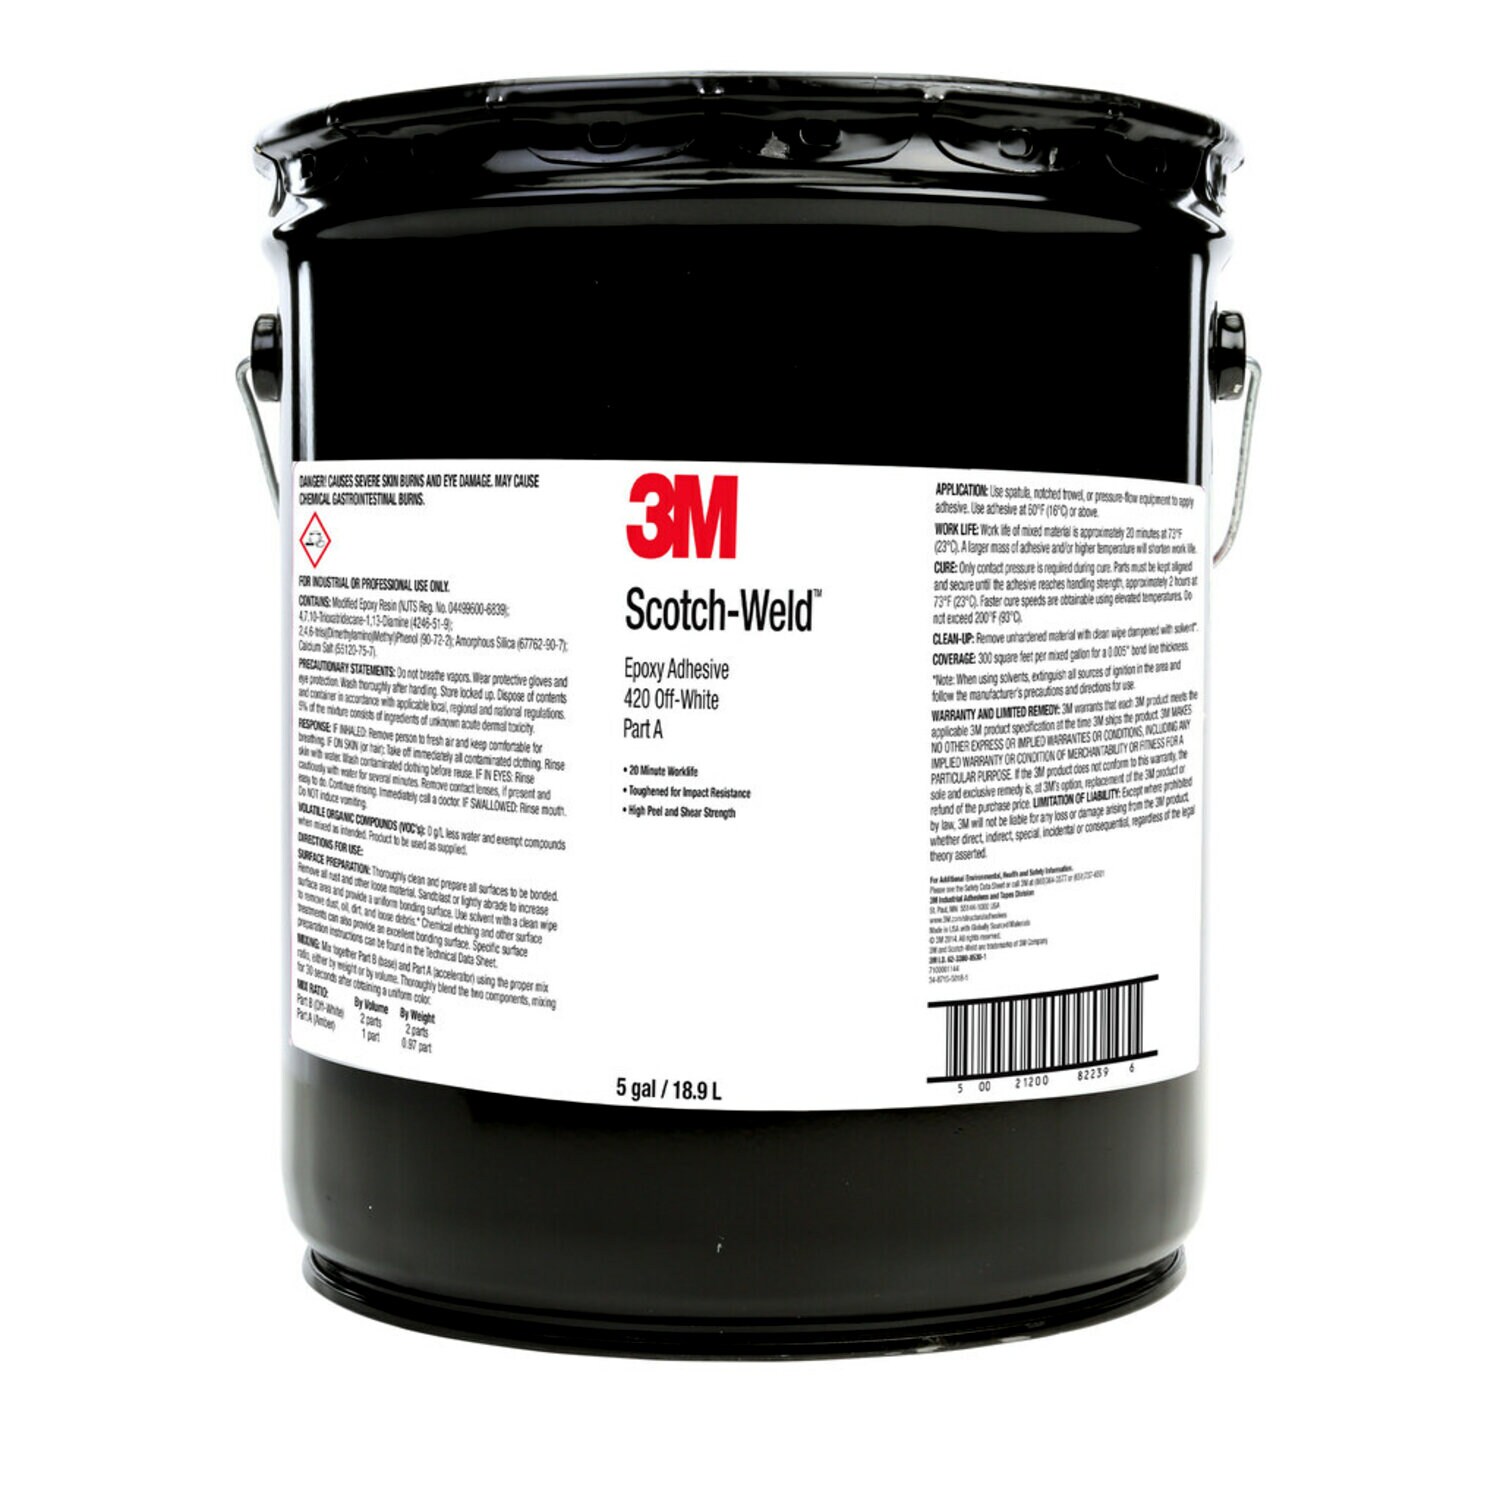 7100001144 - 3M Scotch-Weld Epoxy Adhesive 420, Off-White, Part A, 5 Gallon(Pail),
1 Each/Drum